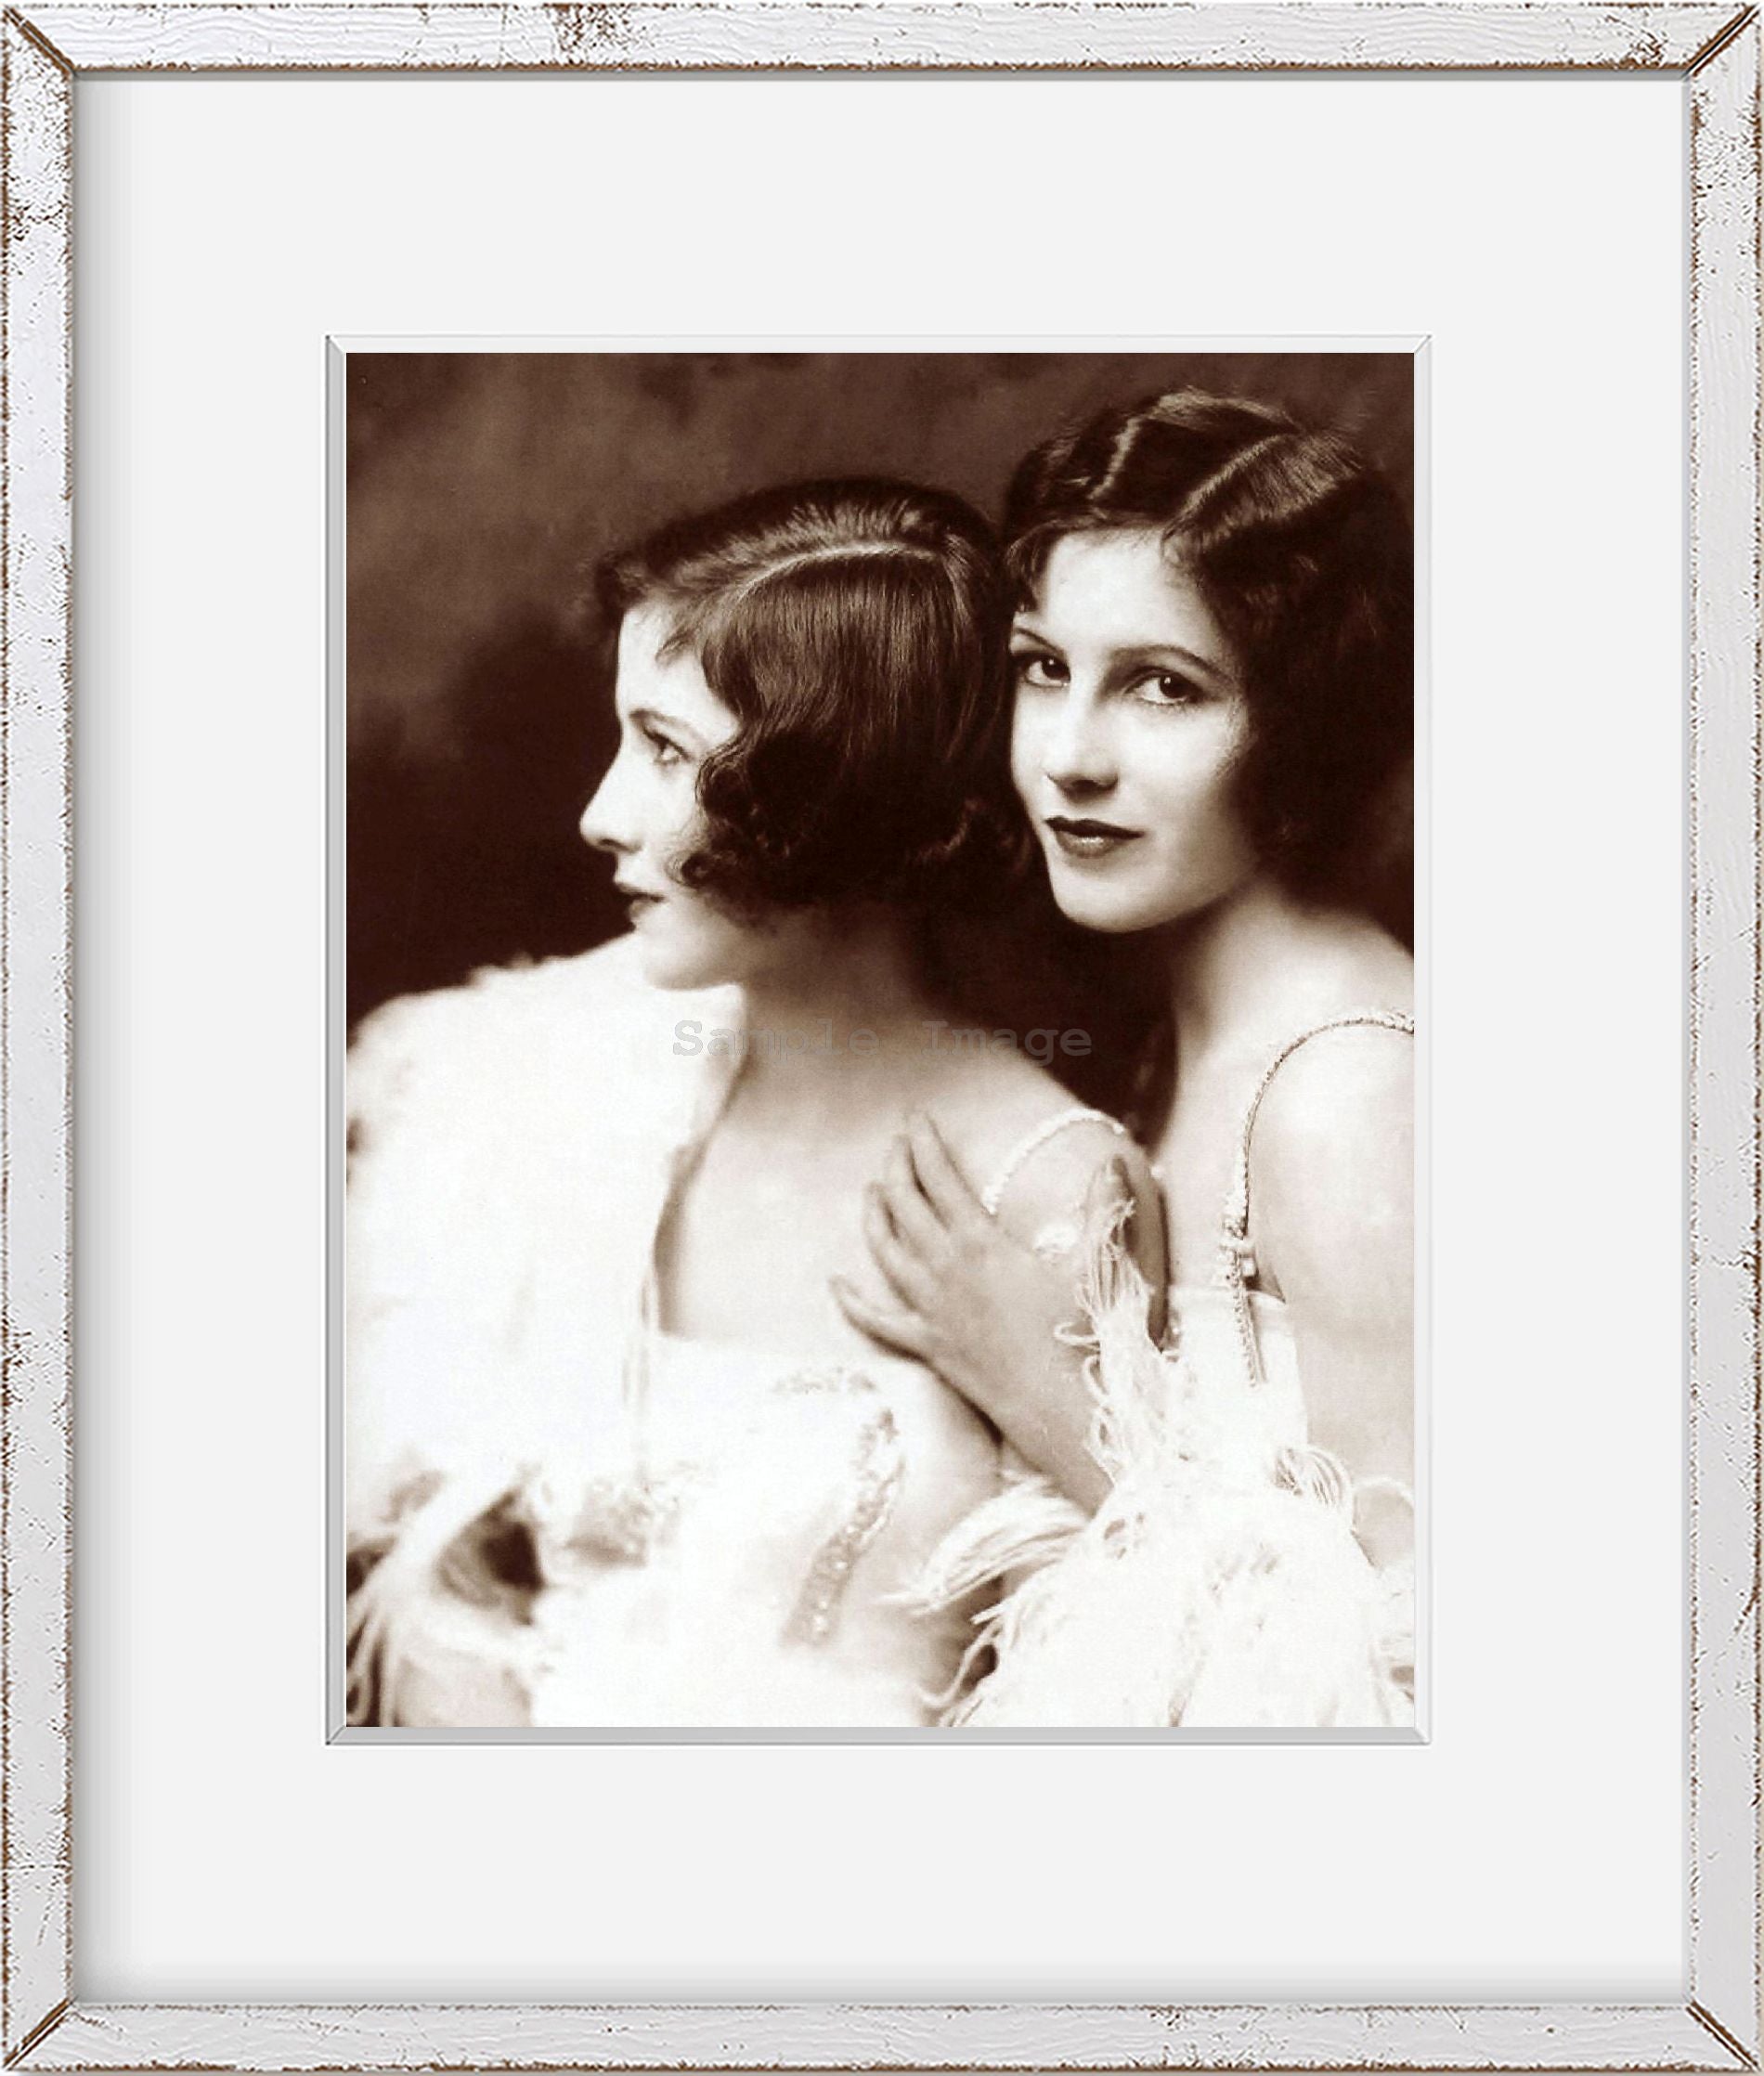 Ziegfeld Follies showgirls Twins Madeline and Marion Fairbanks|Early 1900s Glamo